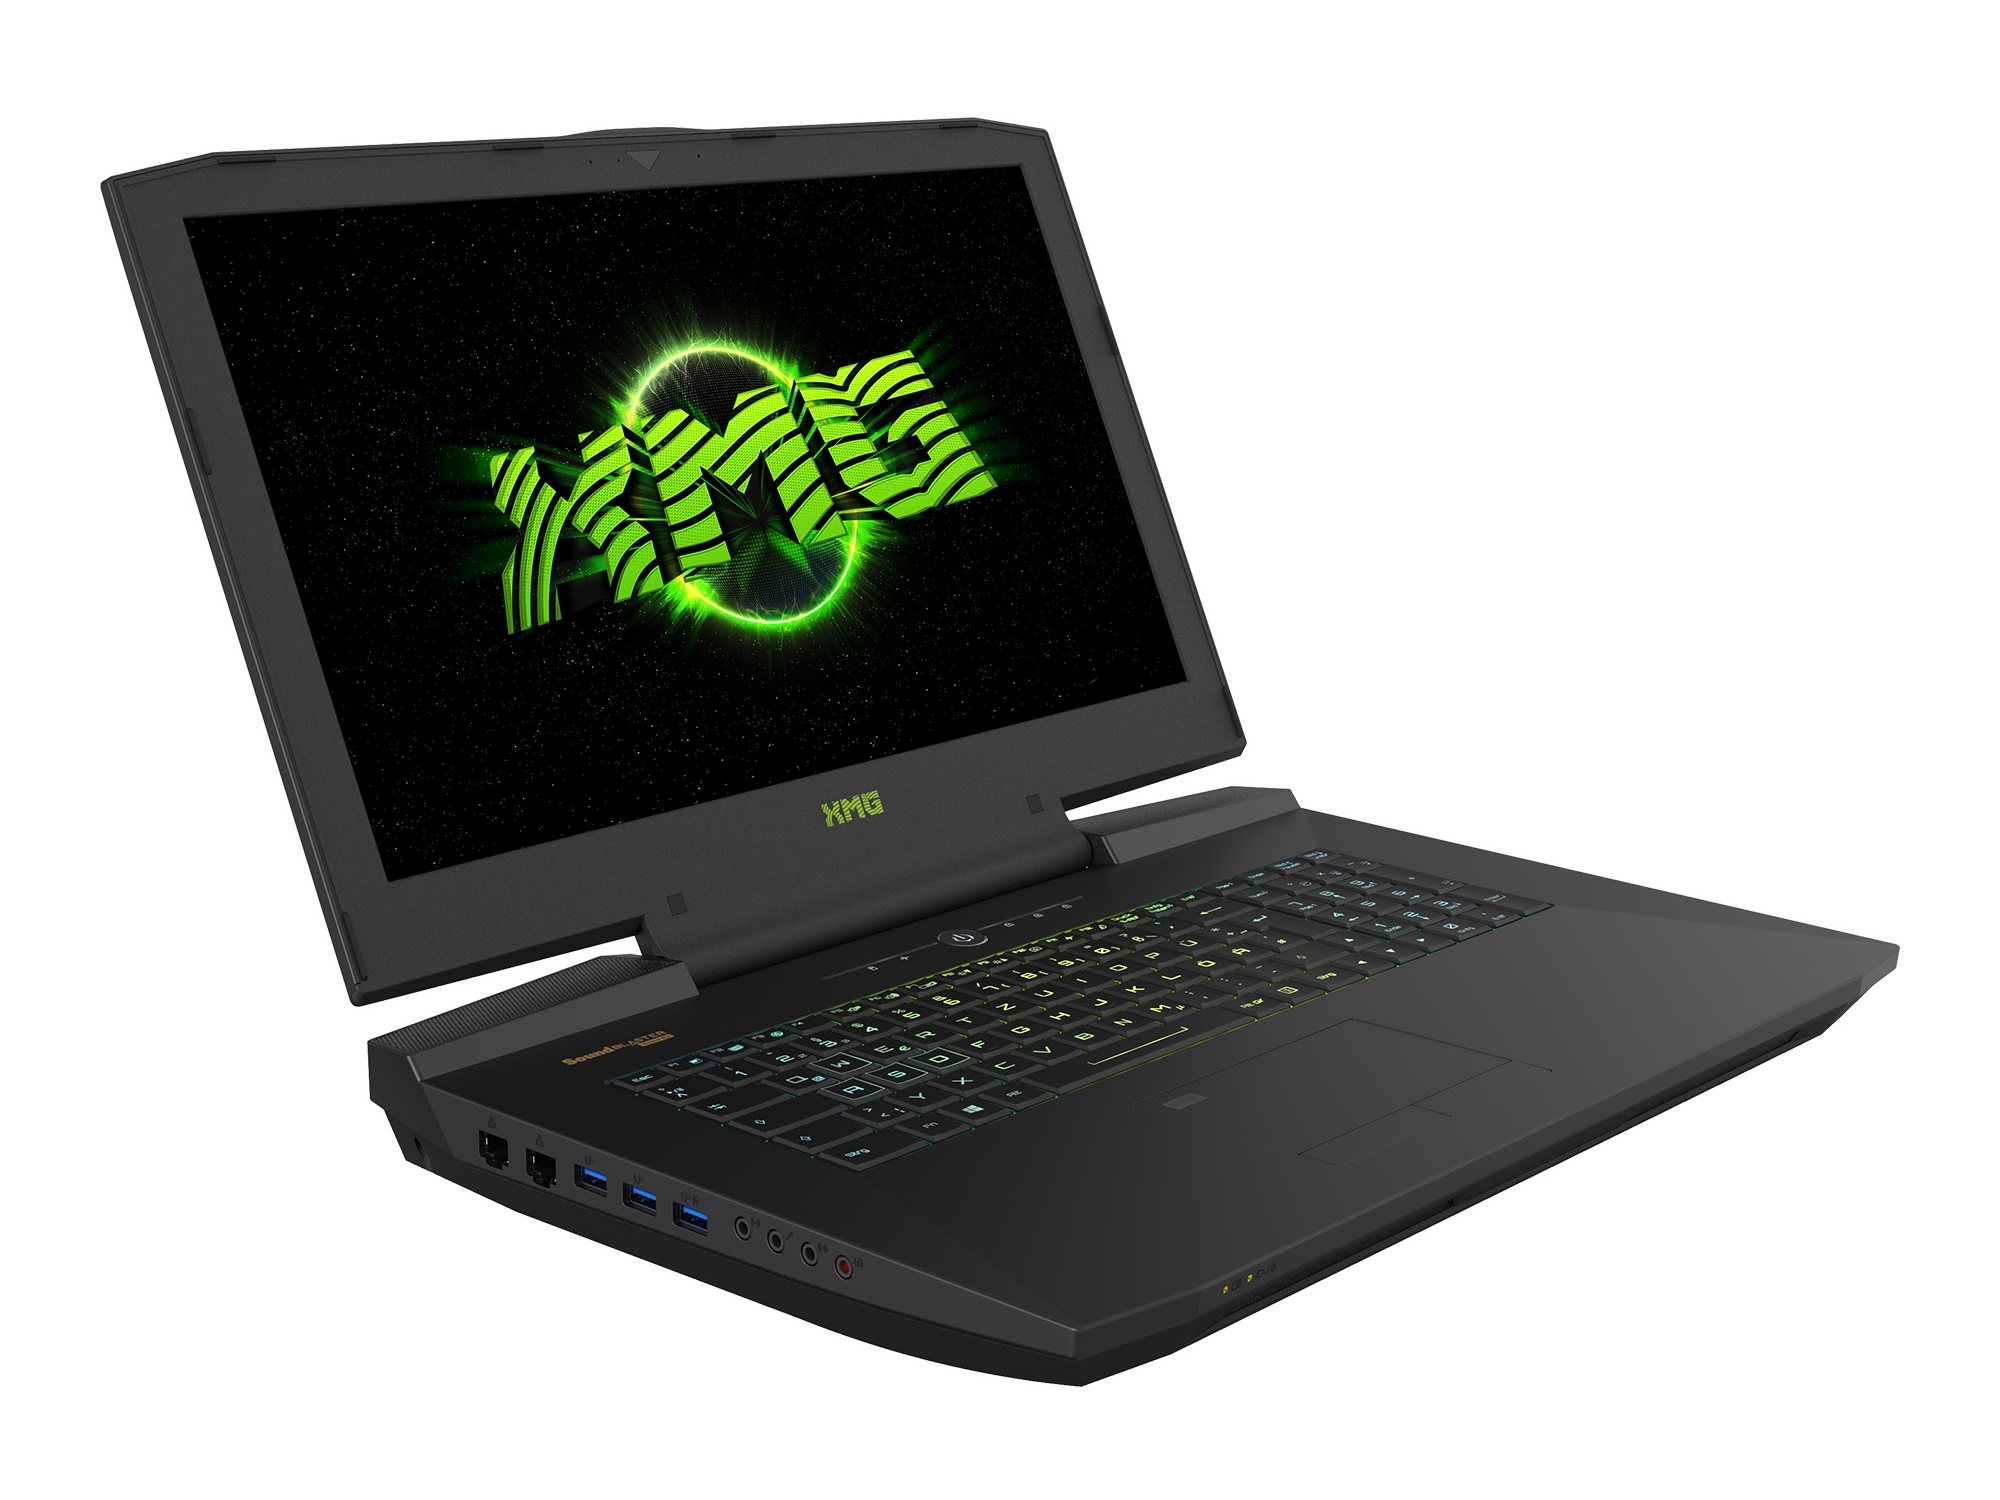 Schenker Technologies XMG U727 (Clevo P870KM-GS) Laptop Review 